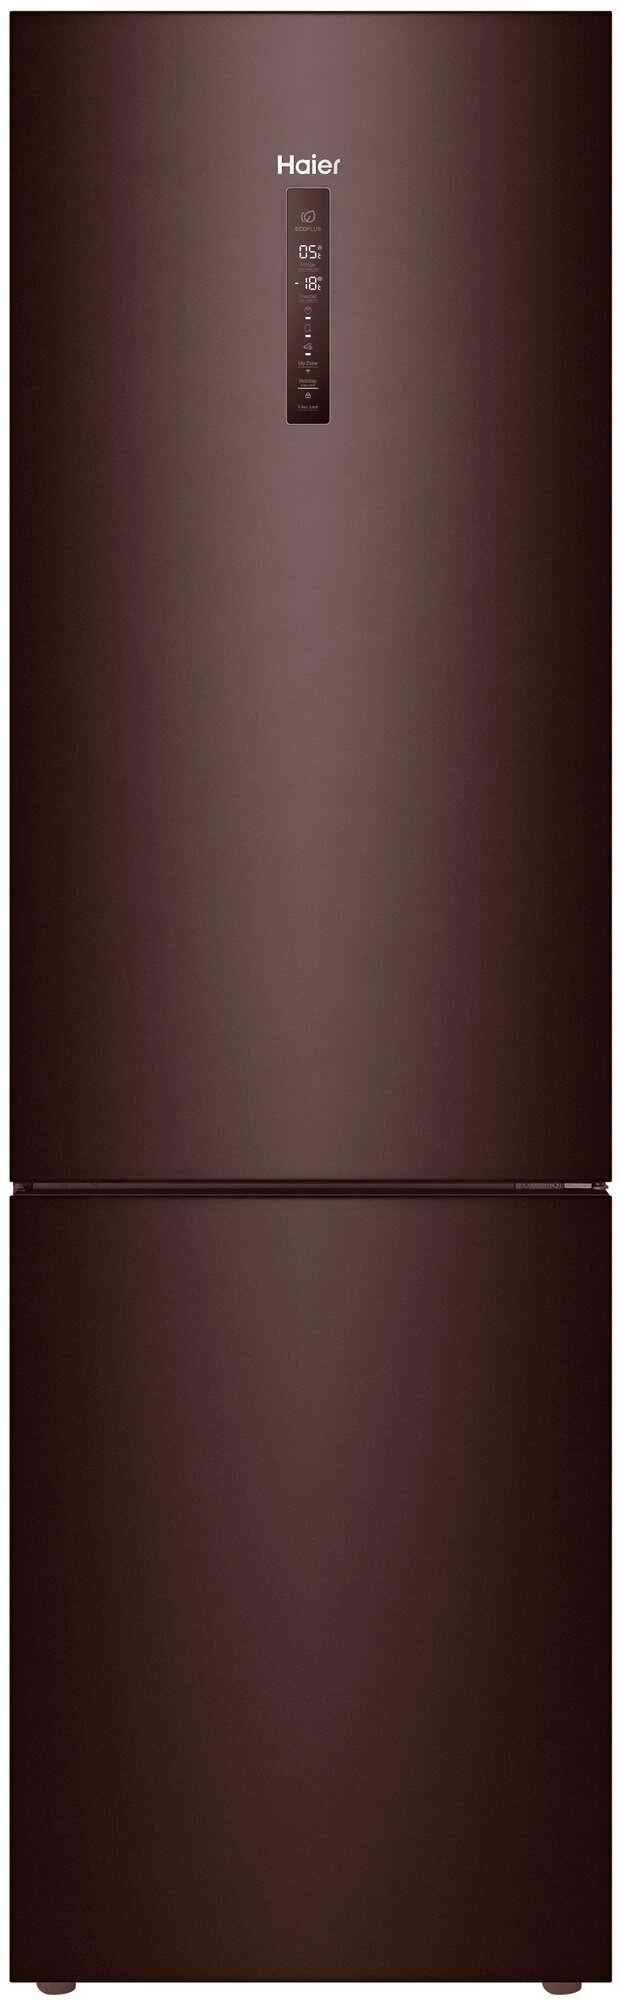 Двухкамерный холодильник Haier C4F740CLBGU1